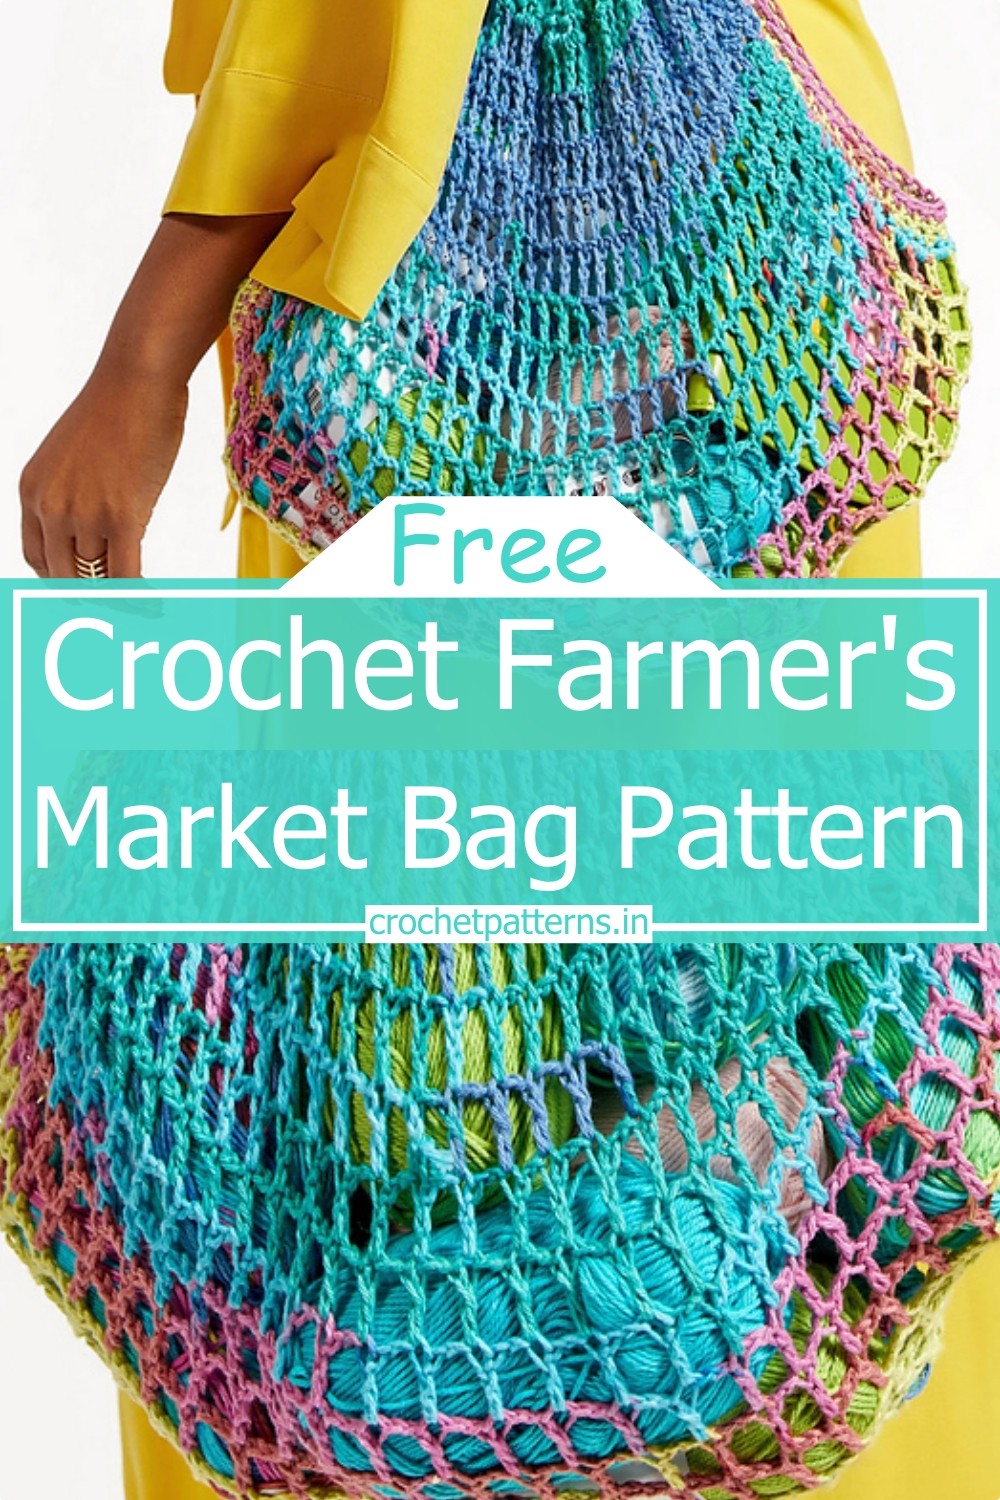 Crochet Farmer's Market Bag Pattern